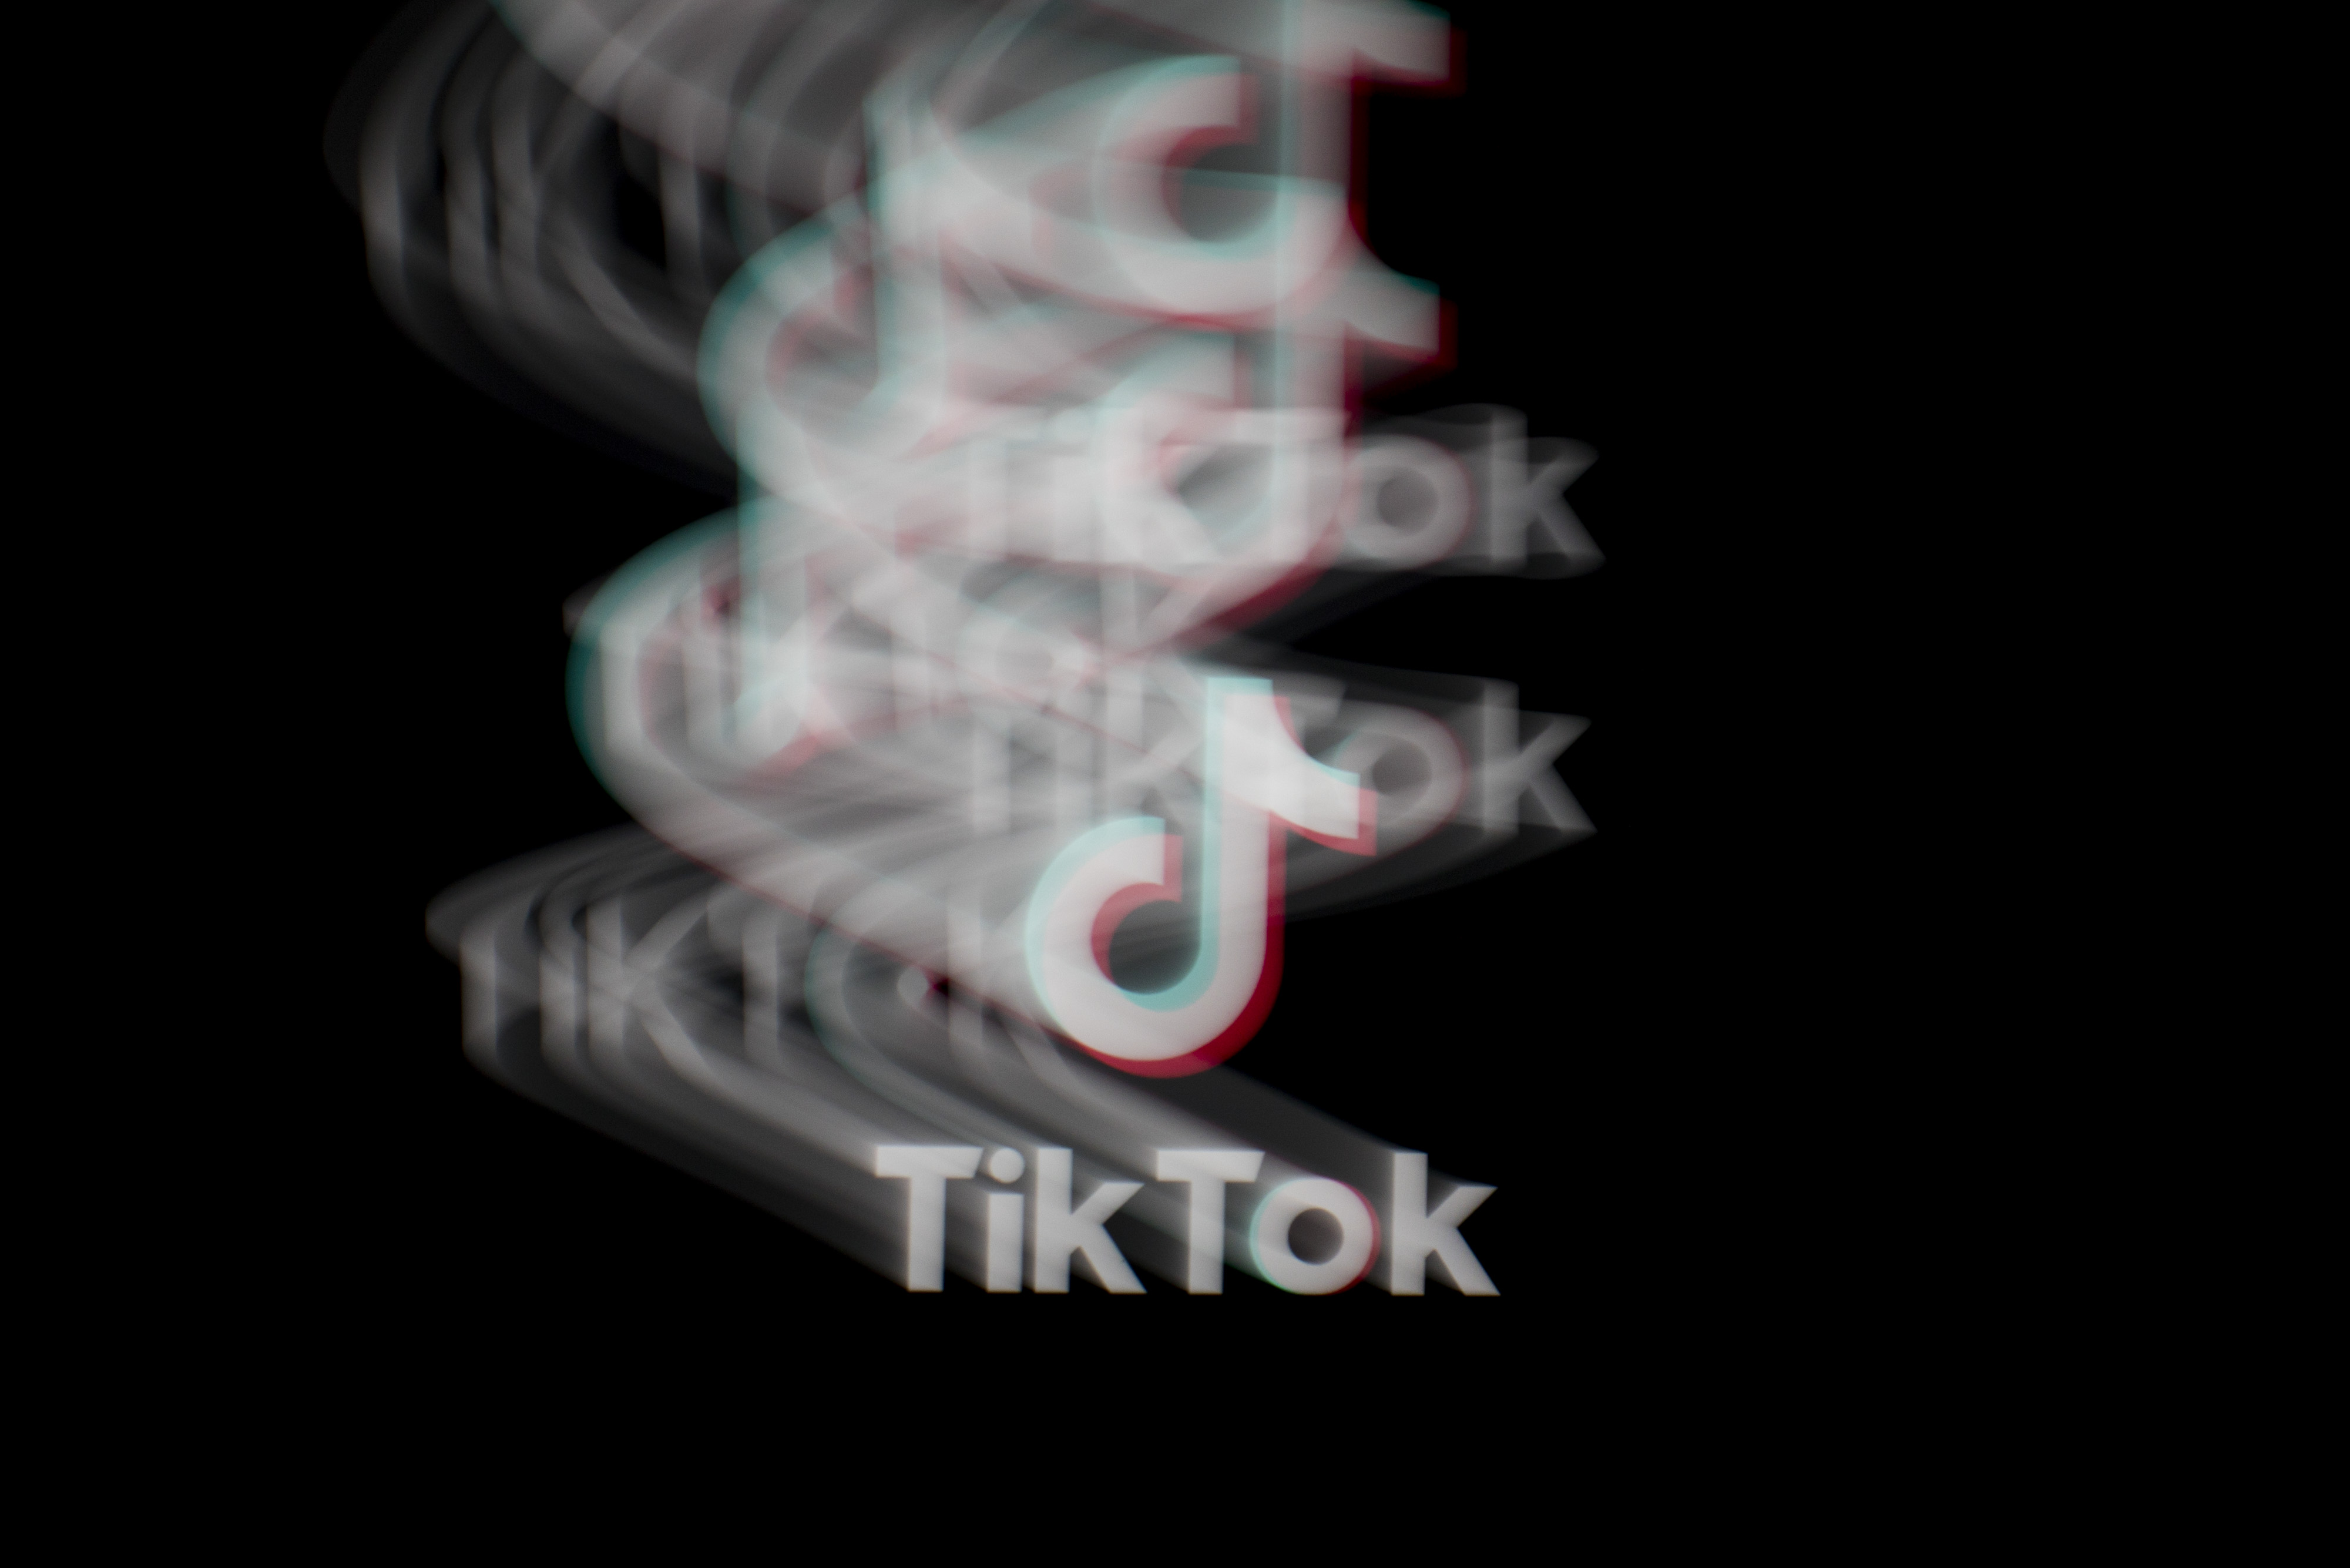 Tiktok Faces Privacy Lawsuit On Behalf Of Millions Of Children Bloomberg